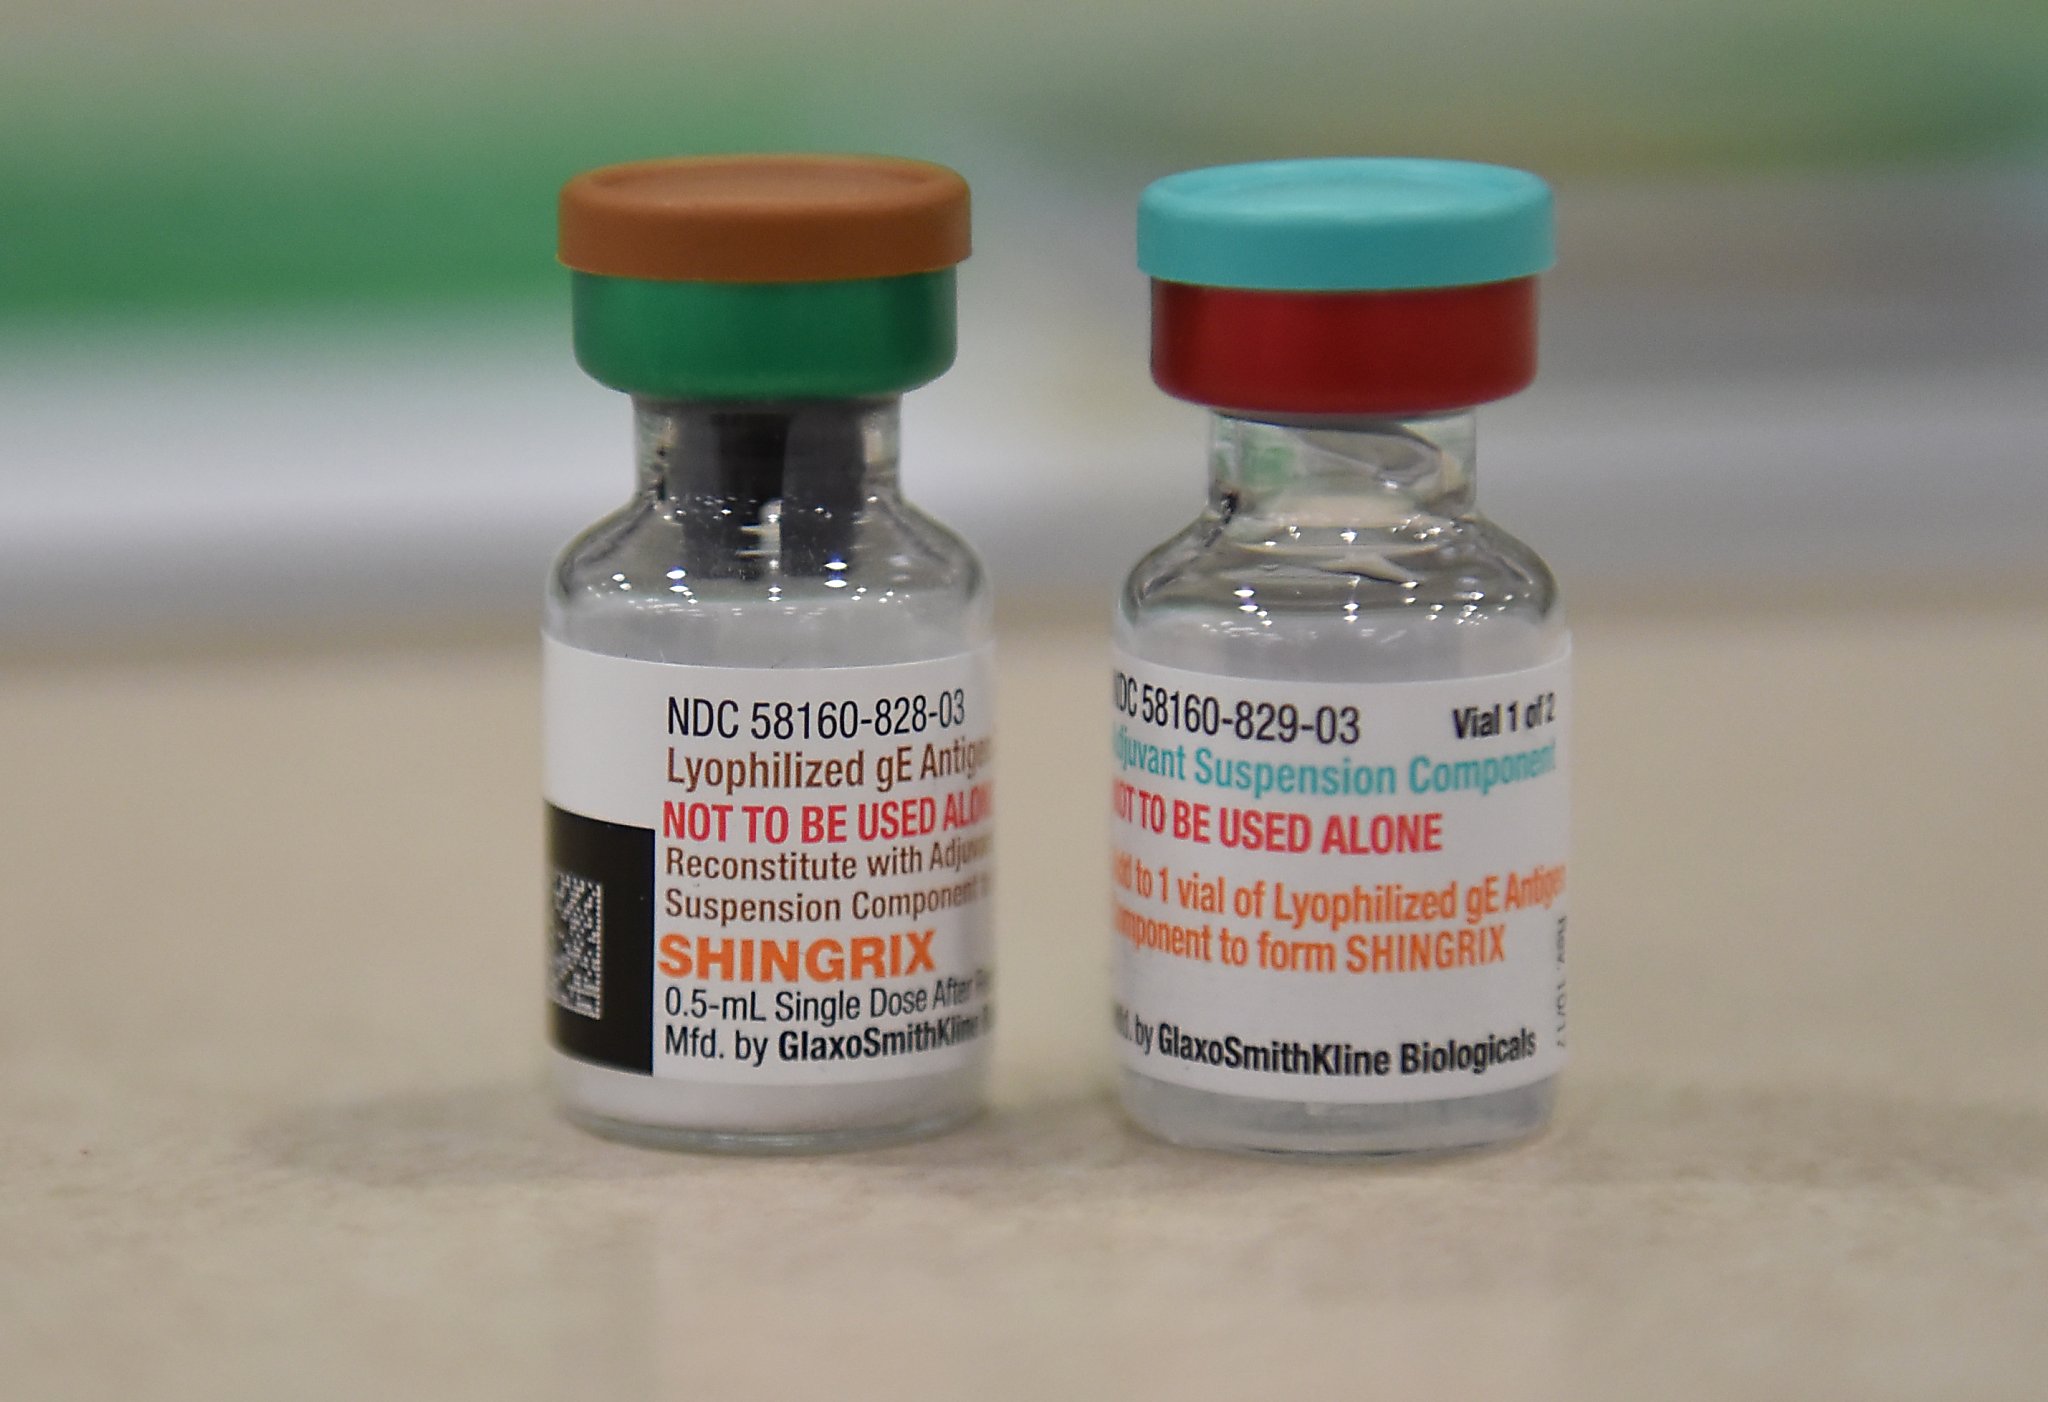 Carefirst coverage for shingles vaccine shingrix kristi centene health care st louis